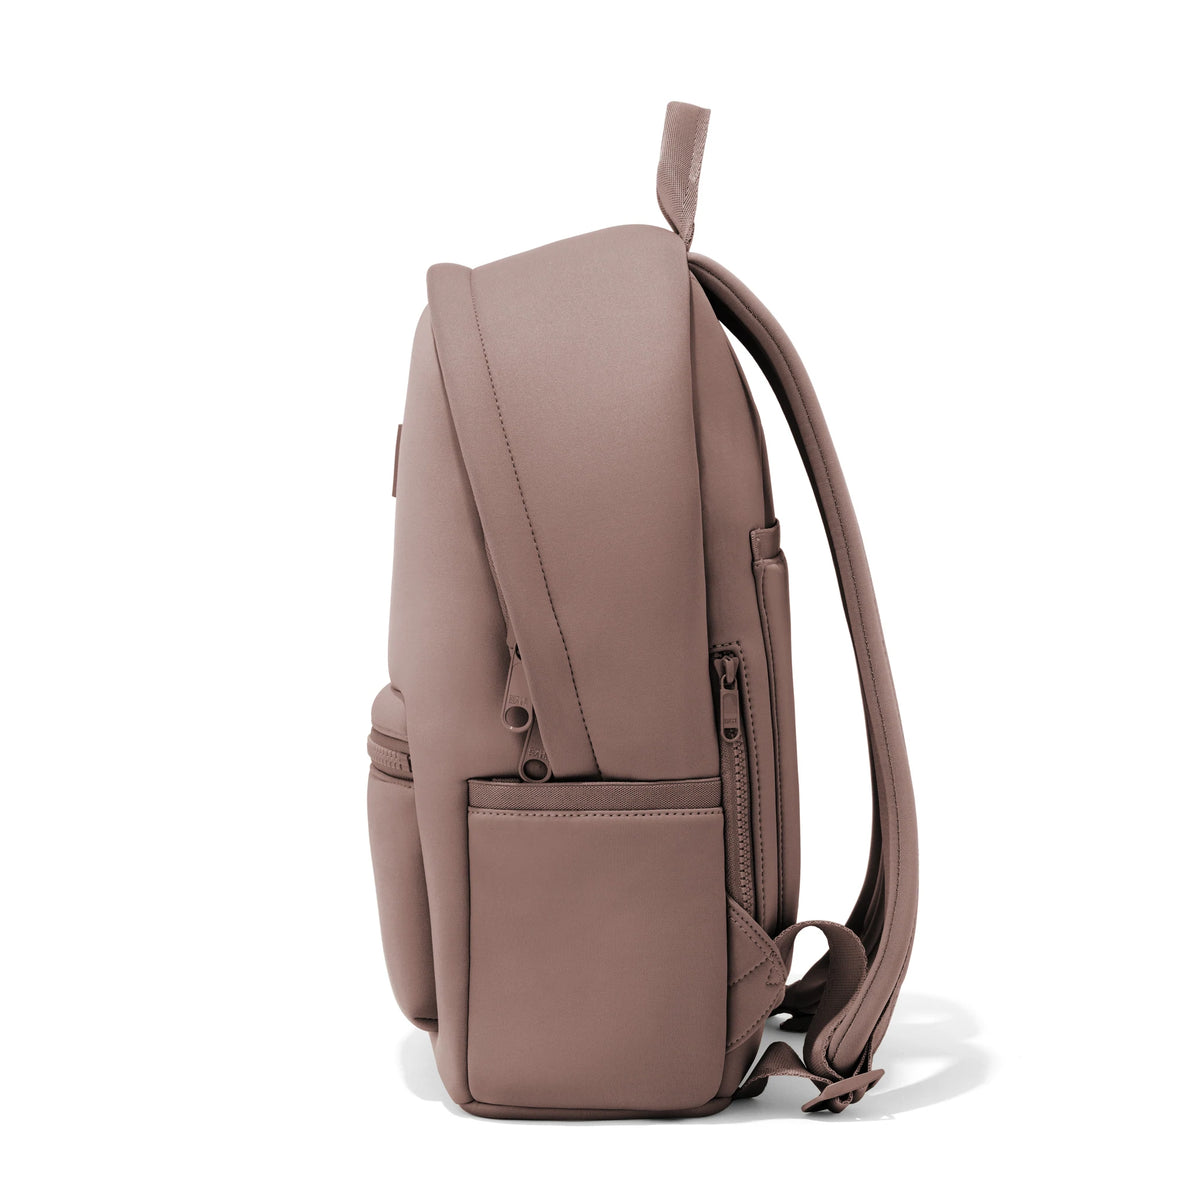 Scouted Gift Pick: The Multi-Purpose Dakota Backpack from Dagne Dover